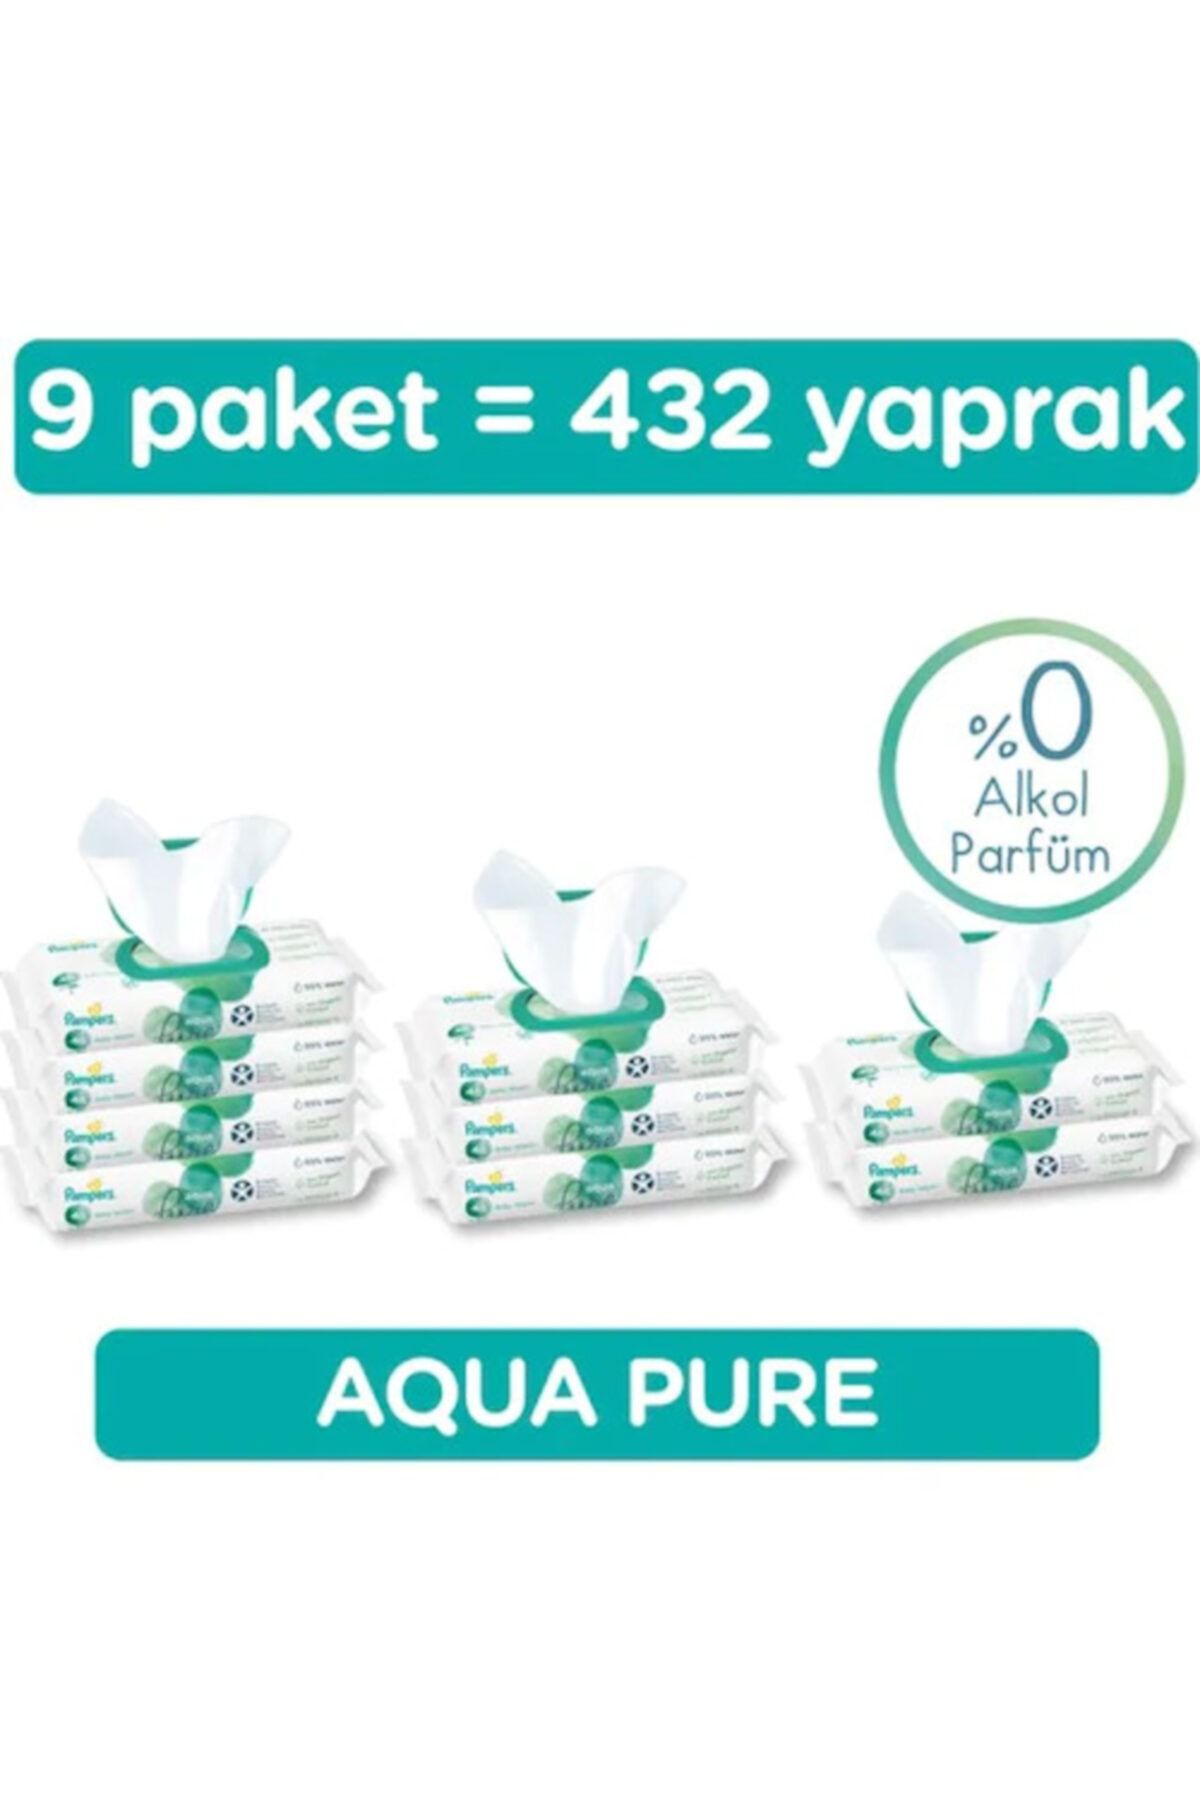 Prima Islak Havlu Mendil Aqua Pure 9'lu Fırsat Paketi 432 Yaprak